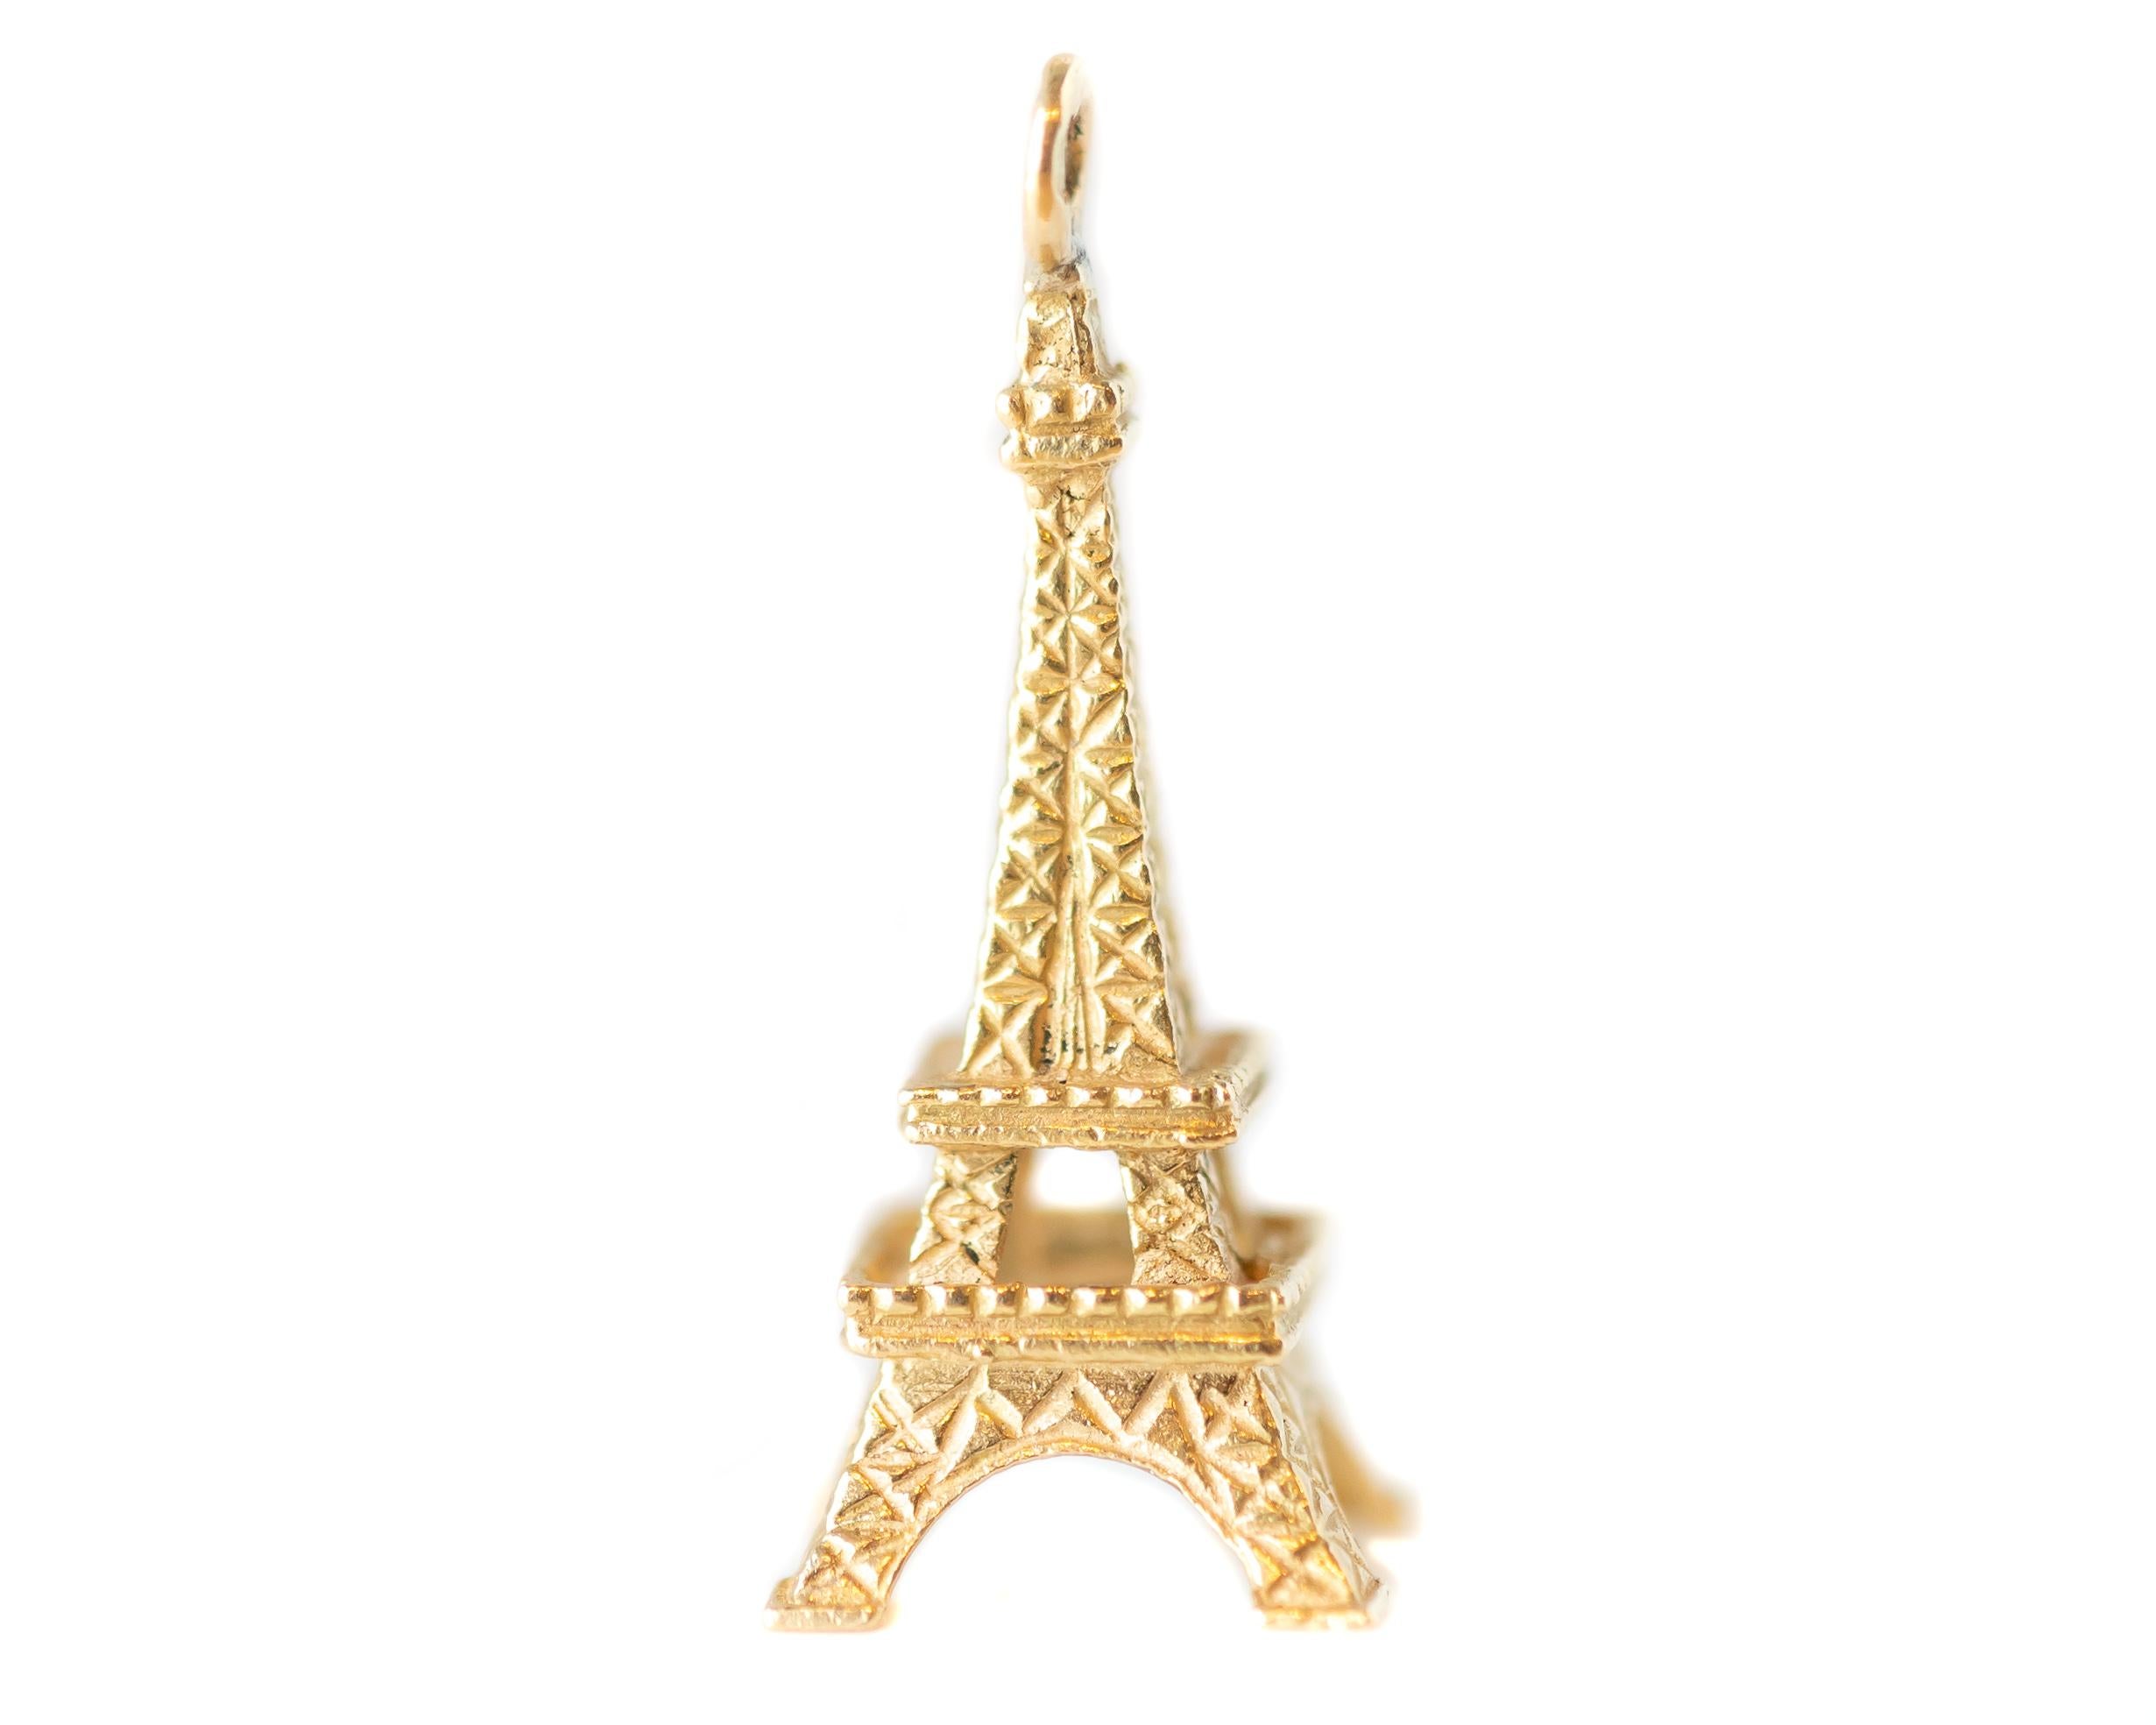 1950s Retro Eiffel Tower Charm - 14 Karat Yellow Gold

Features:
Tiny Eiffel Tower
Sleek, Detailed Design
Textured 14 karat Yellow Gold
Sturdy Bail 
Measures 20 x 7 millimeters 

Charm Details:
Dimensions: 20 x 7 millimeters
Metal: 14 karat Yellow